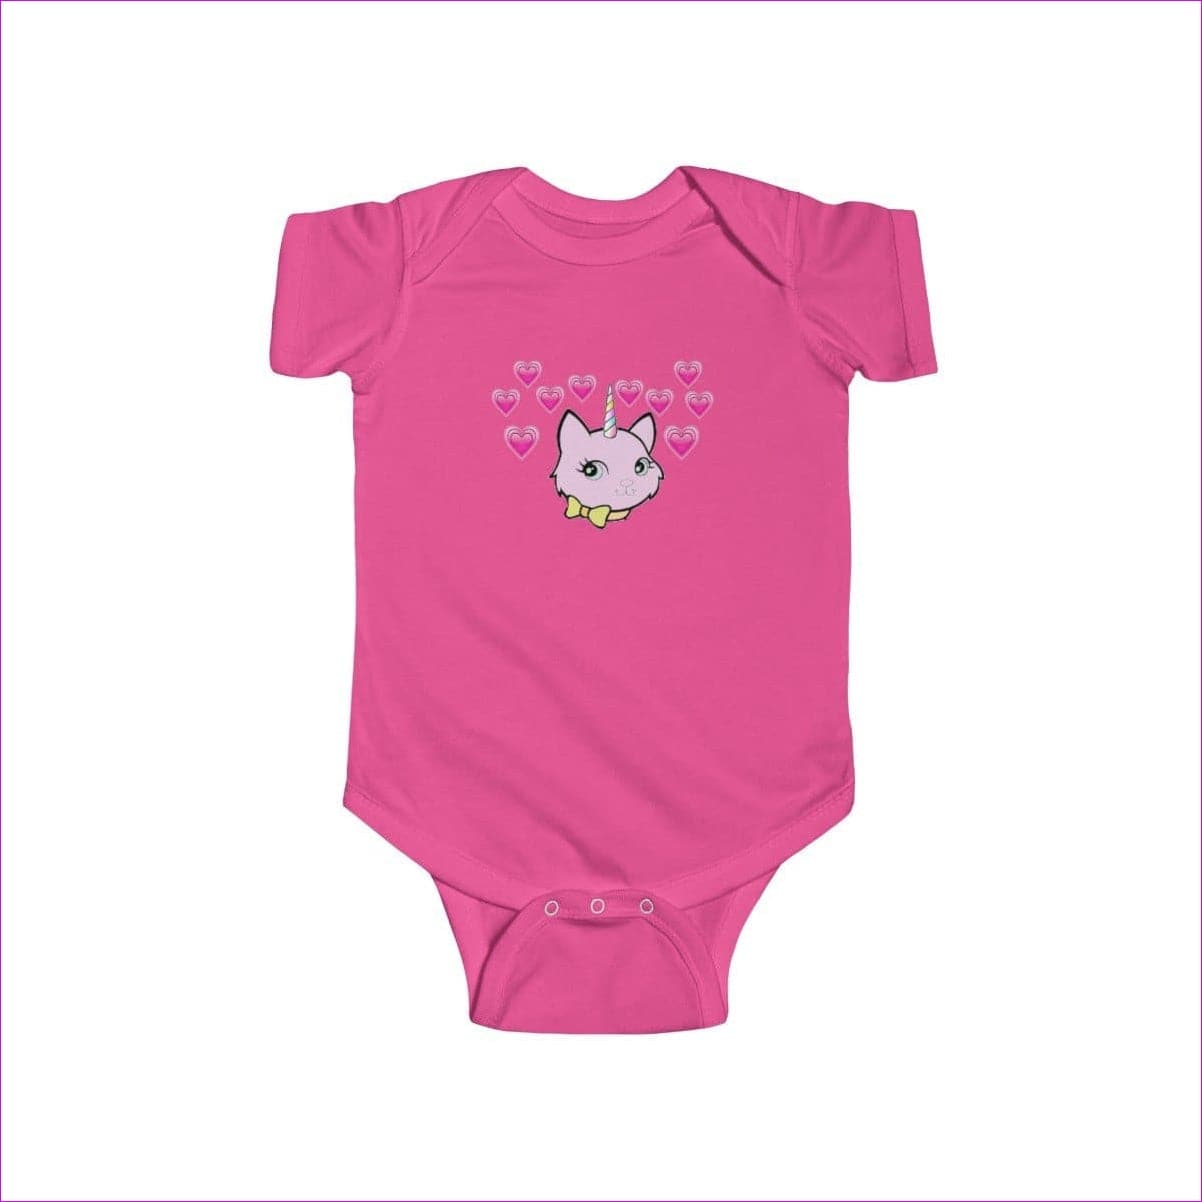 Hot Pink - Bec & Friends Uni-Kitten Infant Fine Jersey Bodysuit - onesie at TFC&H Co.